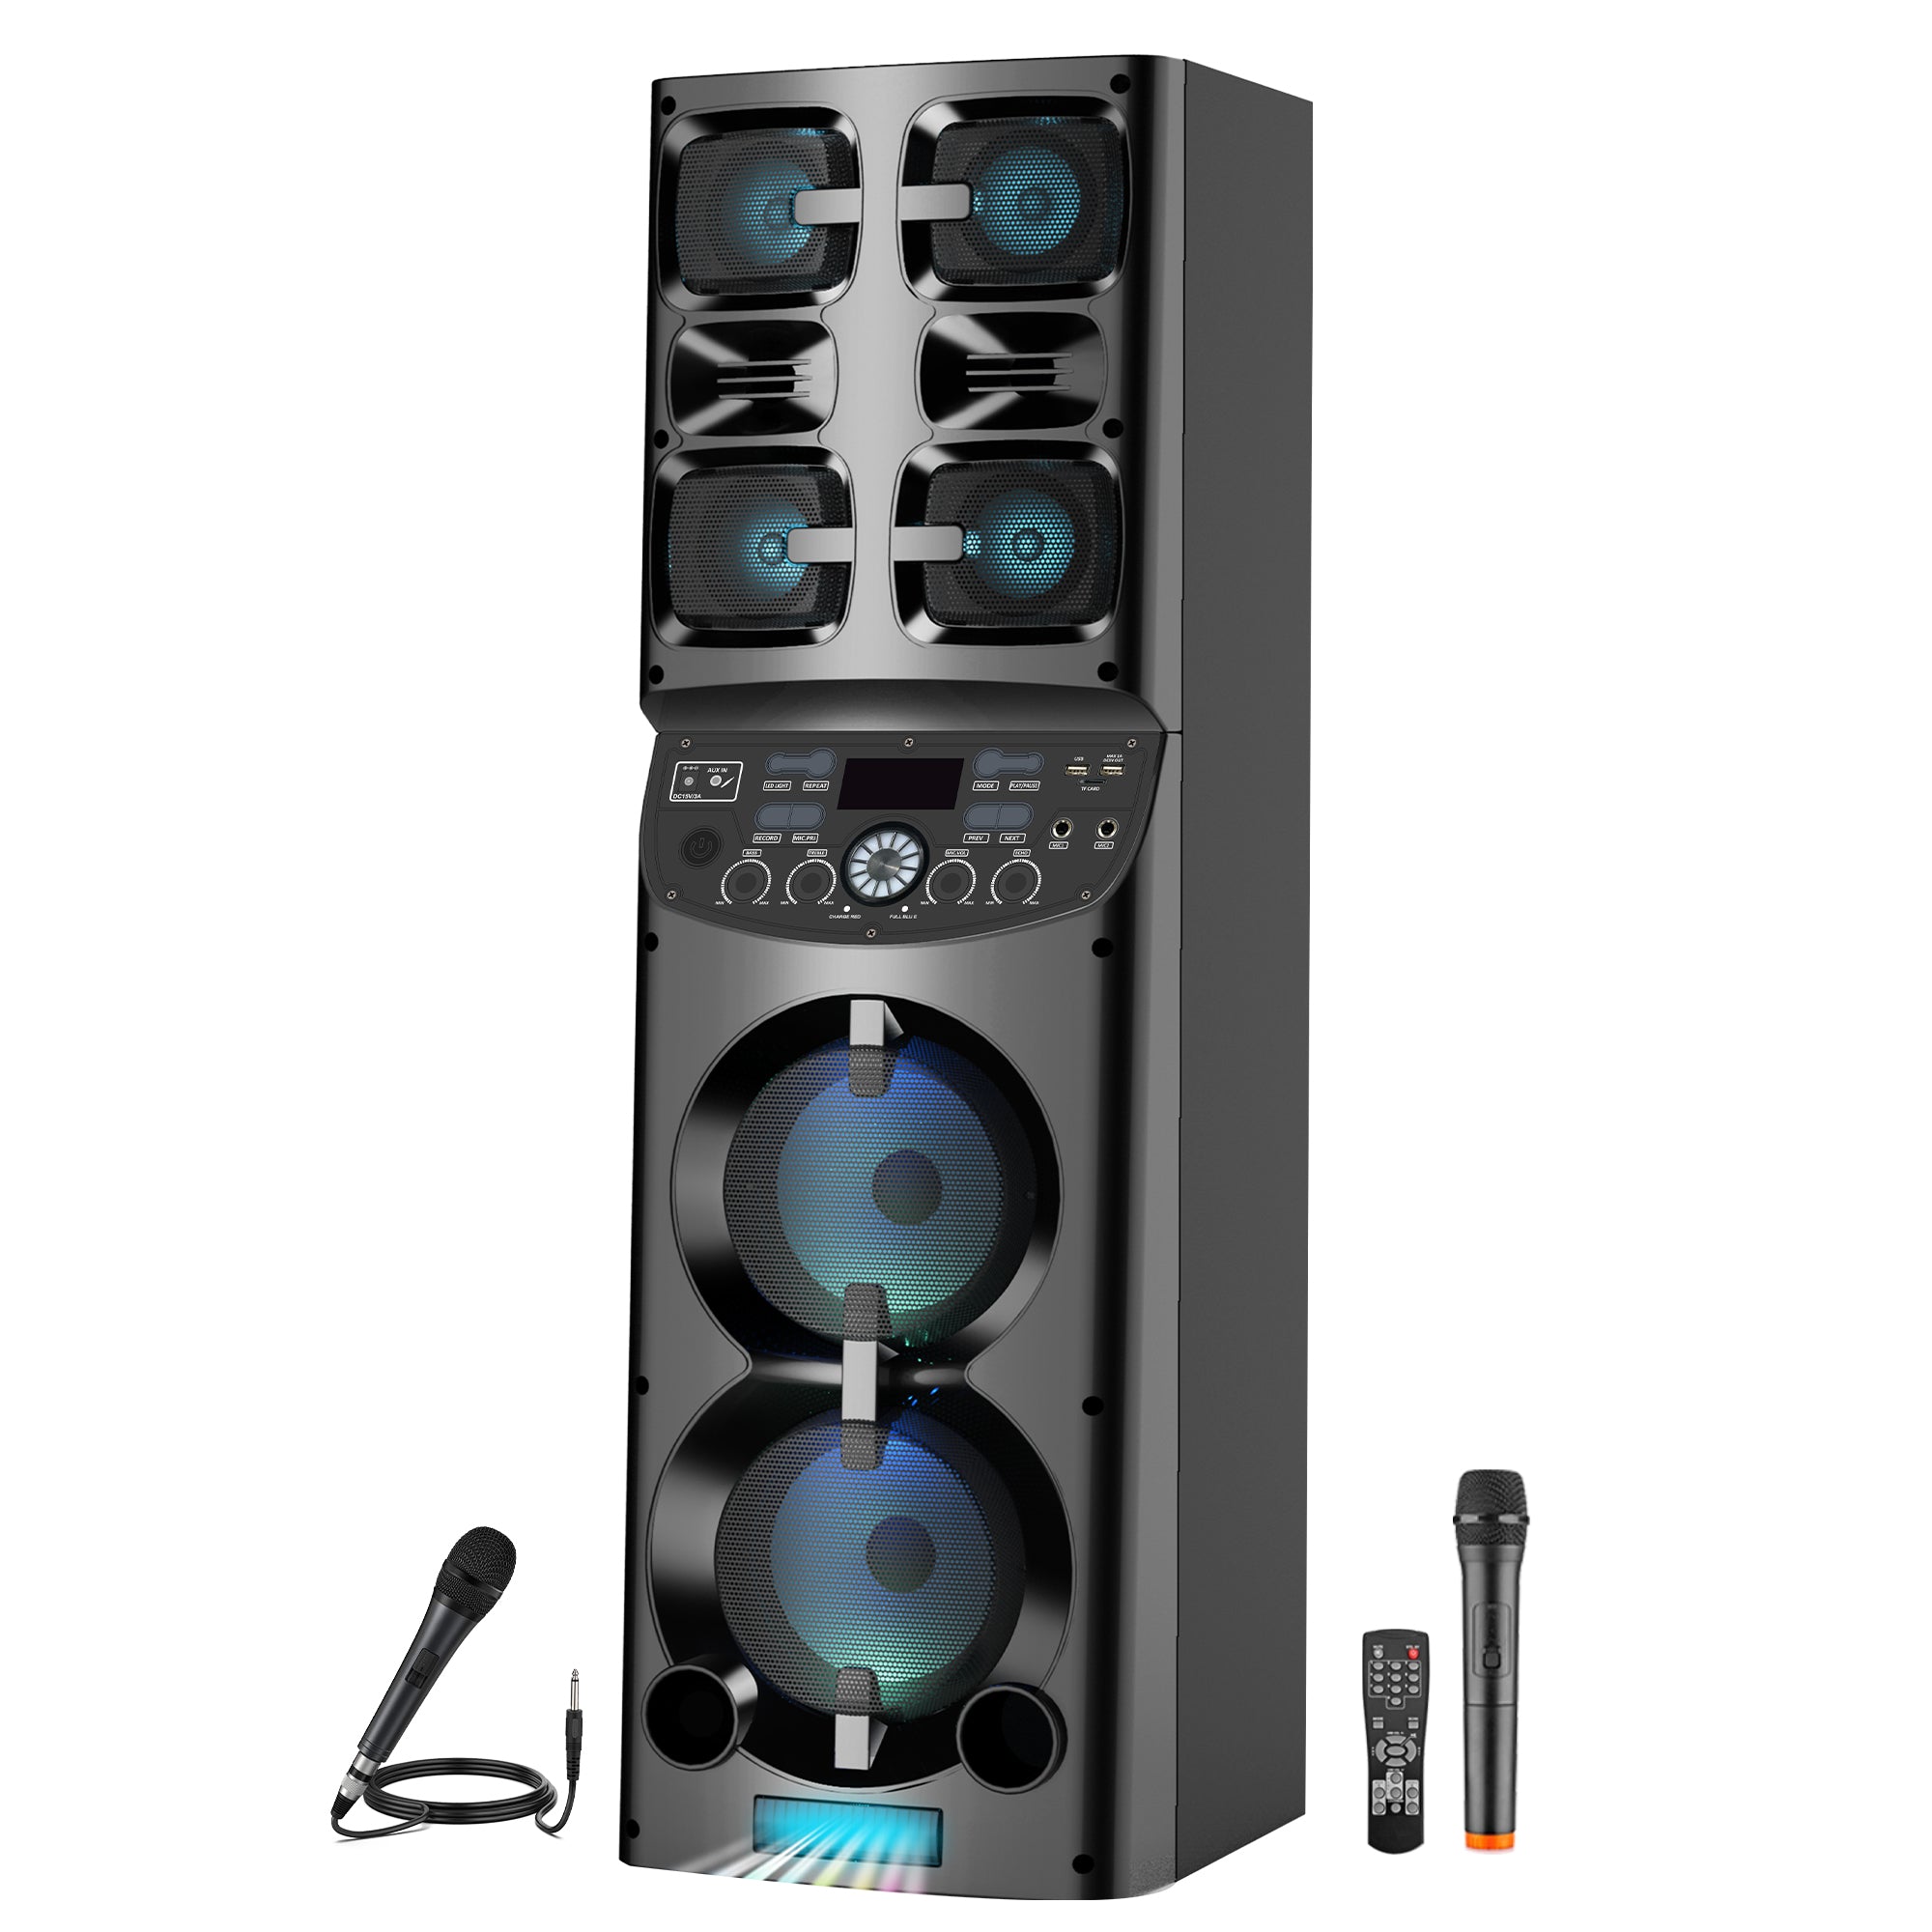 Gizmore GIZ WHEELZ T6000 60 W Bluetooth Tower Speaker  (Black, Stereo Channel)